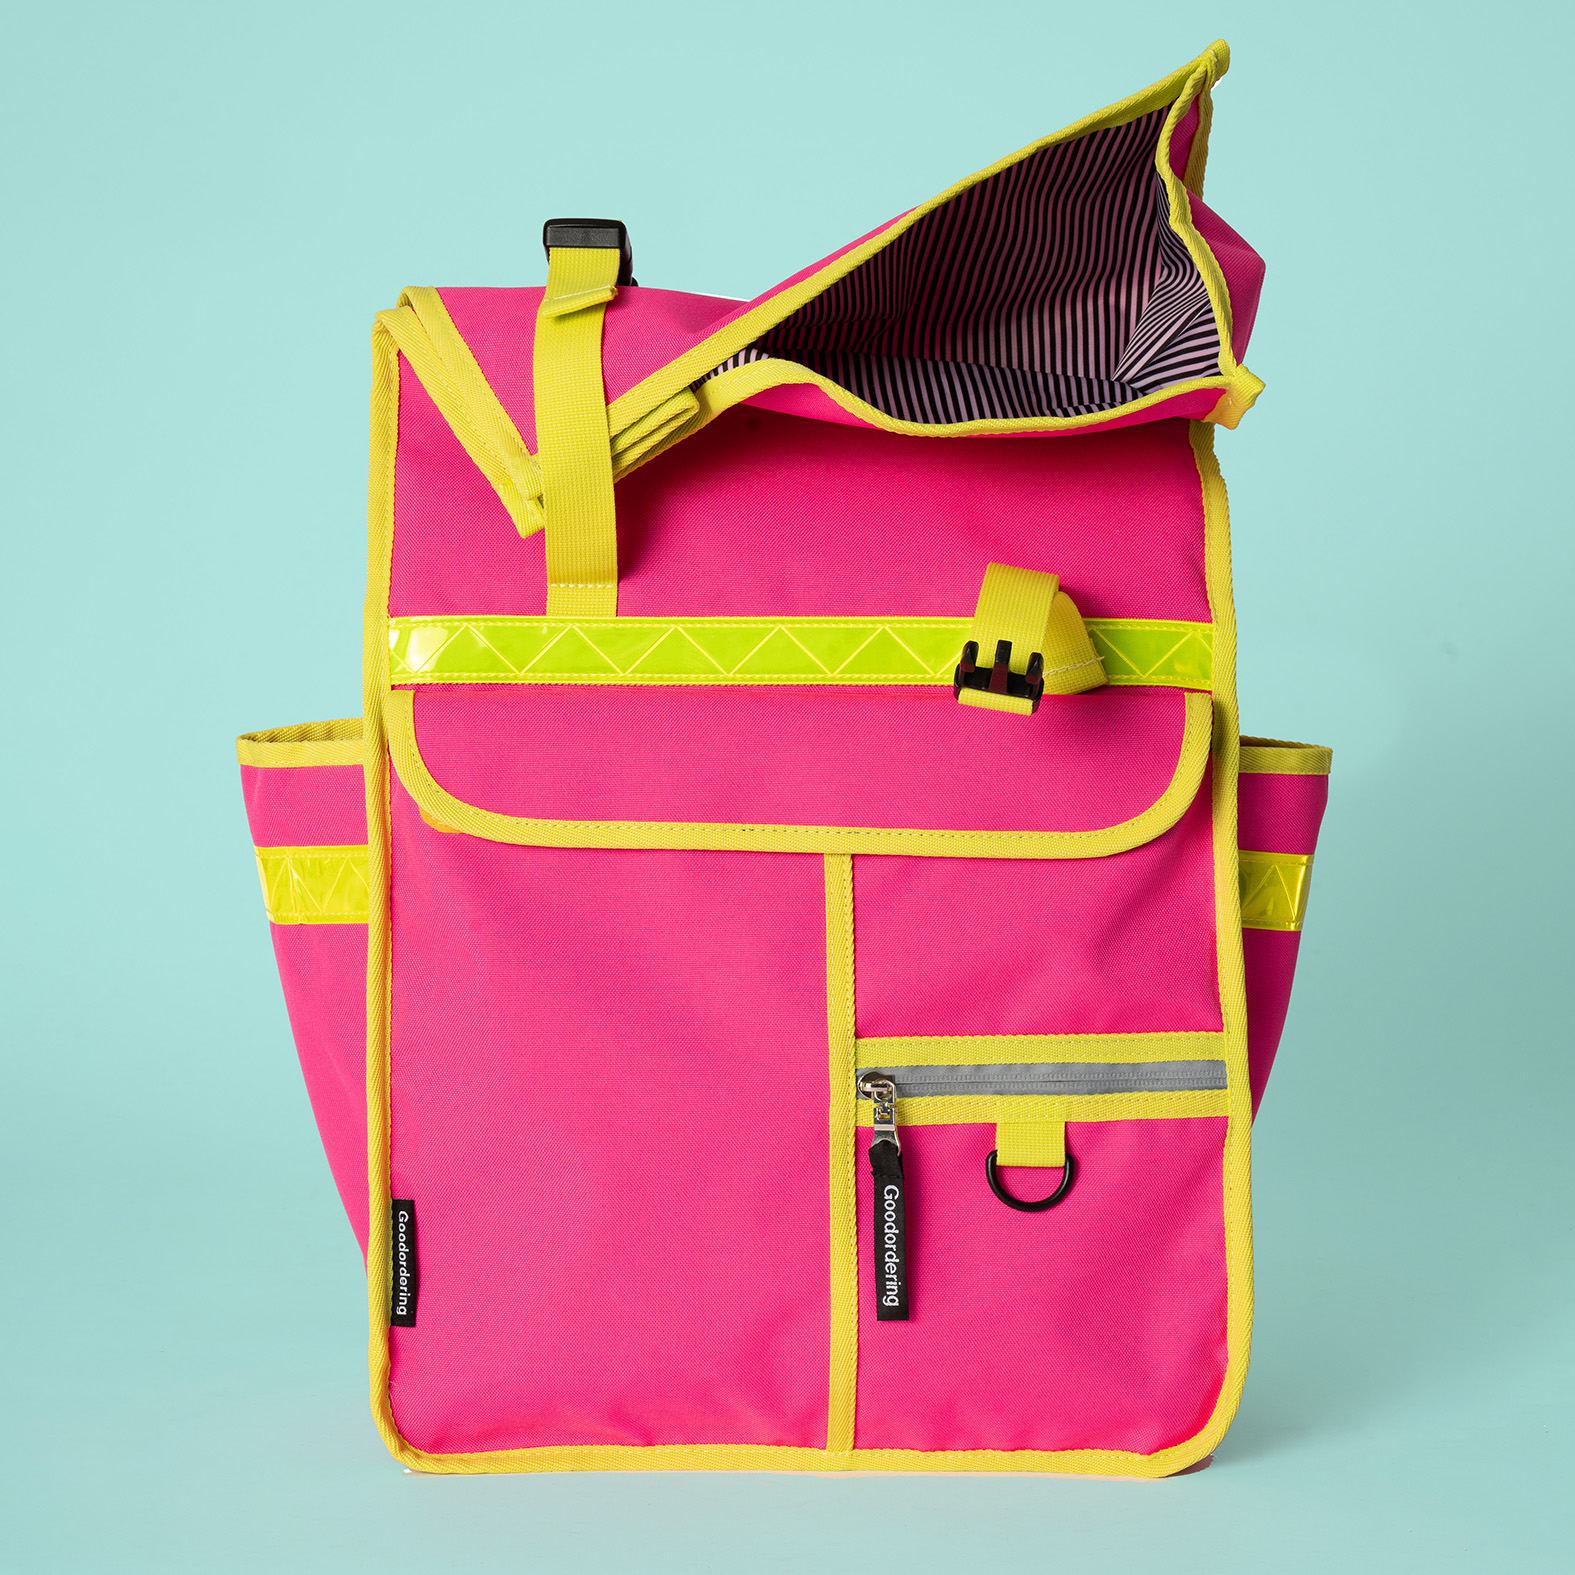 Goodordering Neon pink rolltop backpack pannier